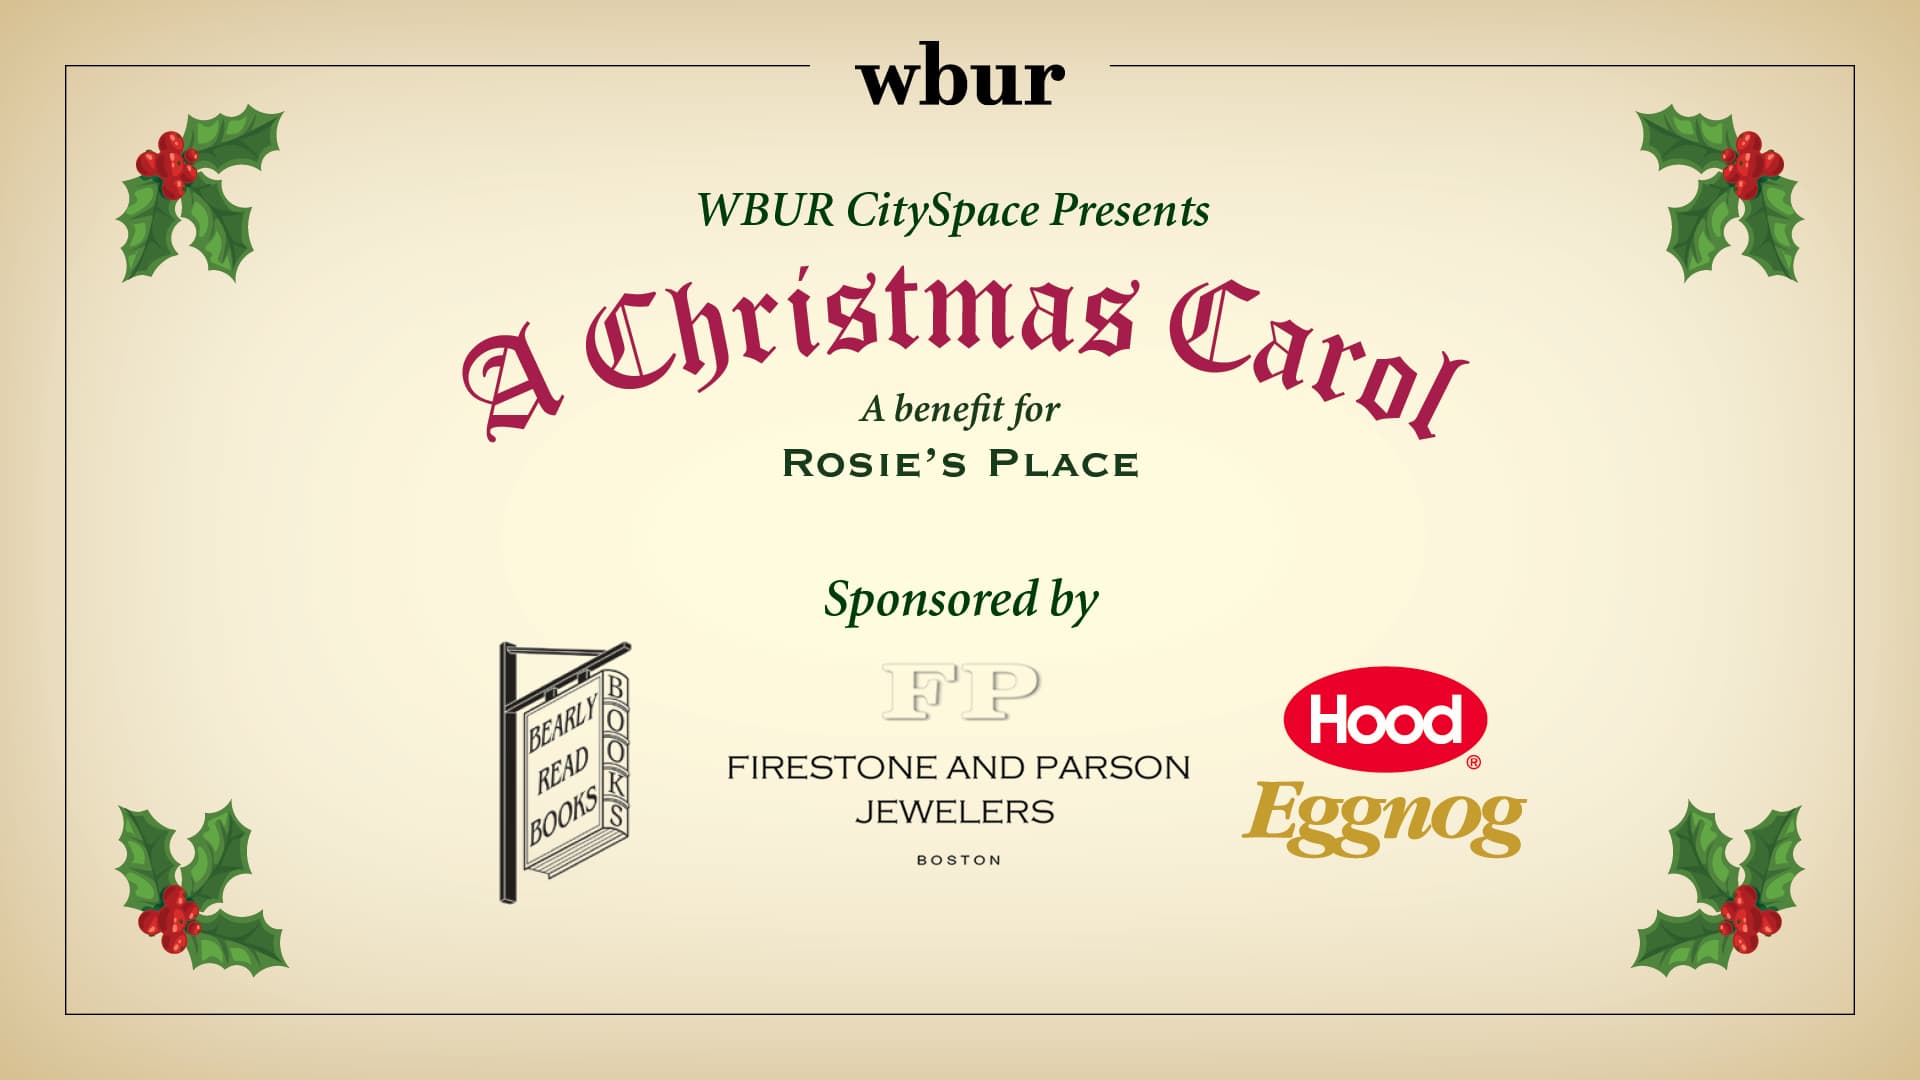 WBUR CitySpace Presents "A Christmas Carol" Events